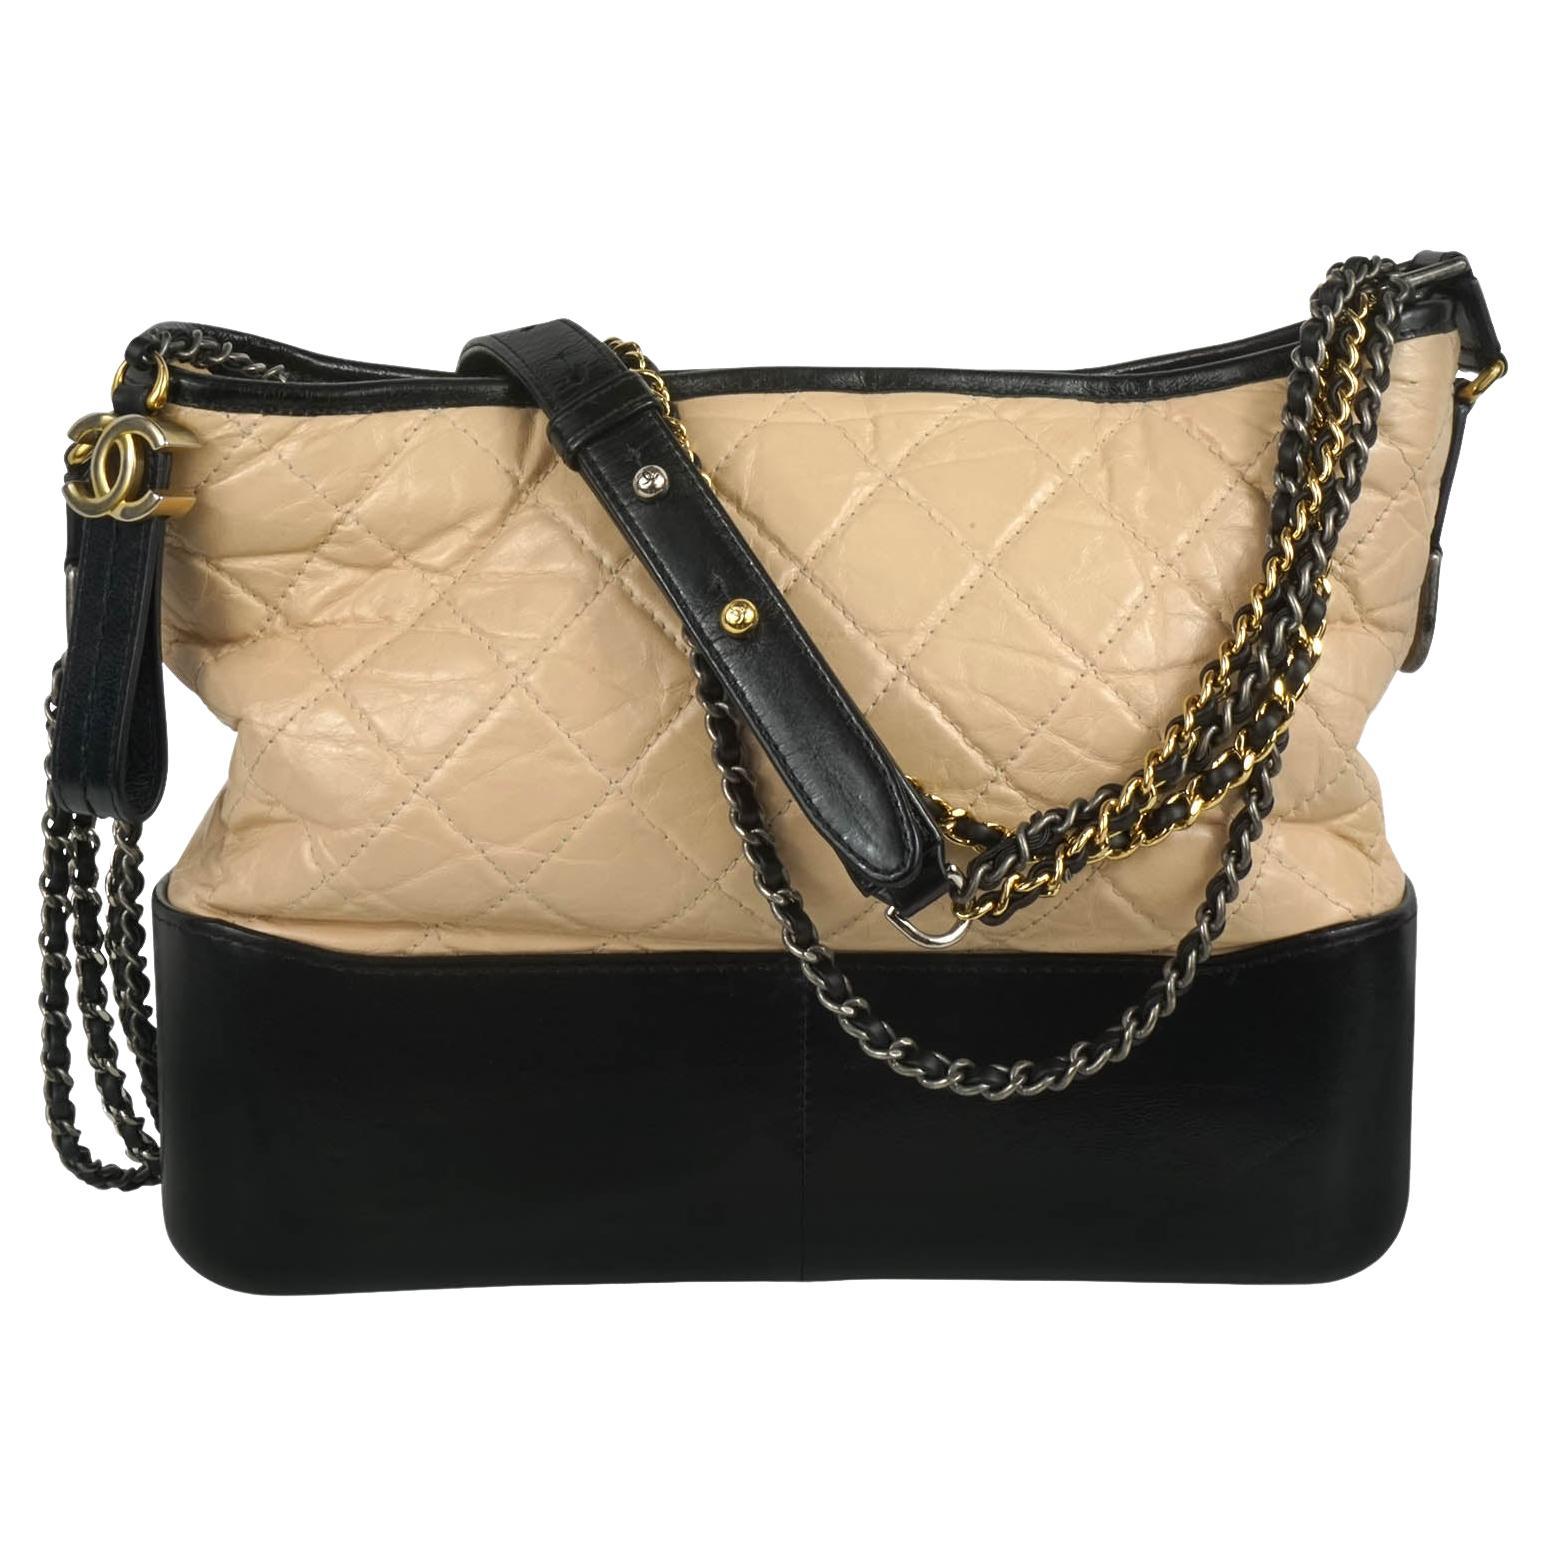 Chanel 2 Tone Beige Black Medium Aged Calfskin Leather Gabrielle Bag  2018